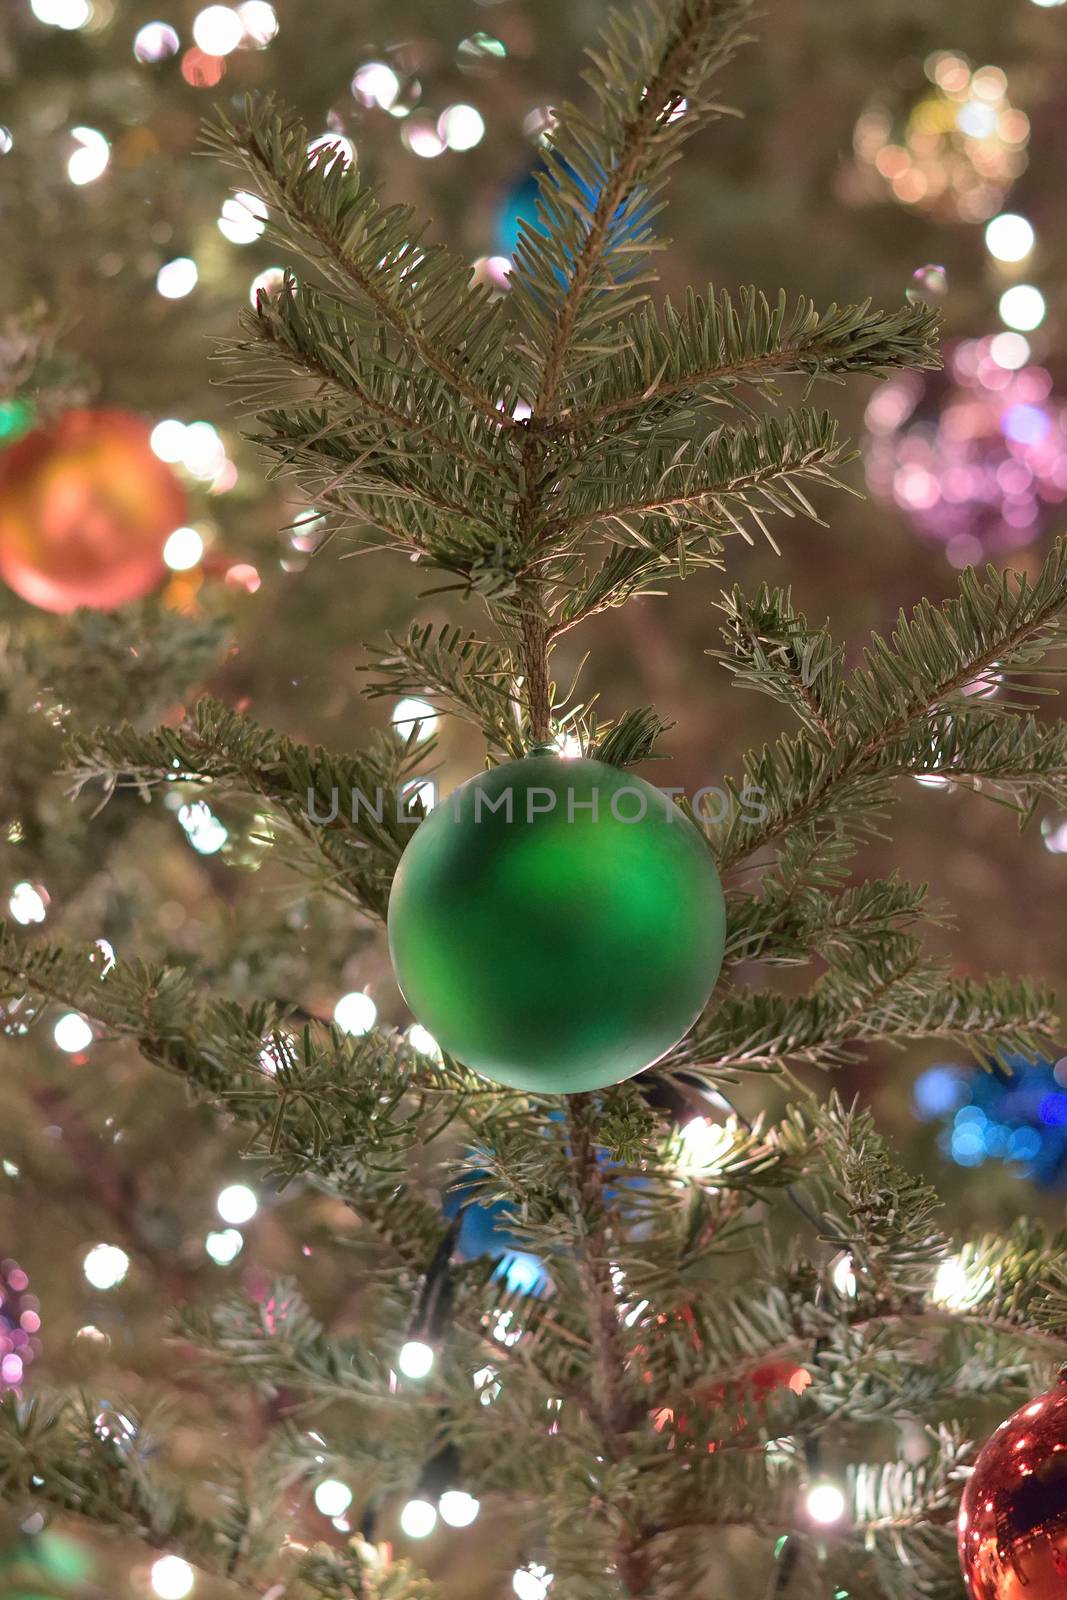 Christmas tree holiday background with decorations by shubhashish